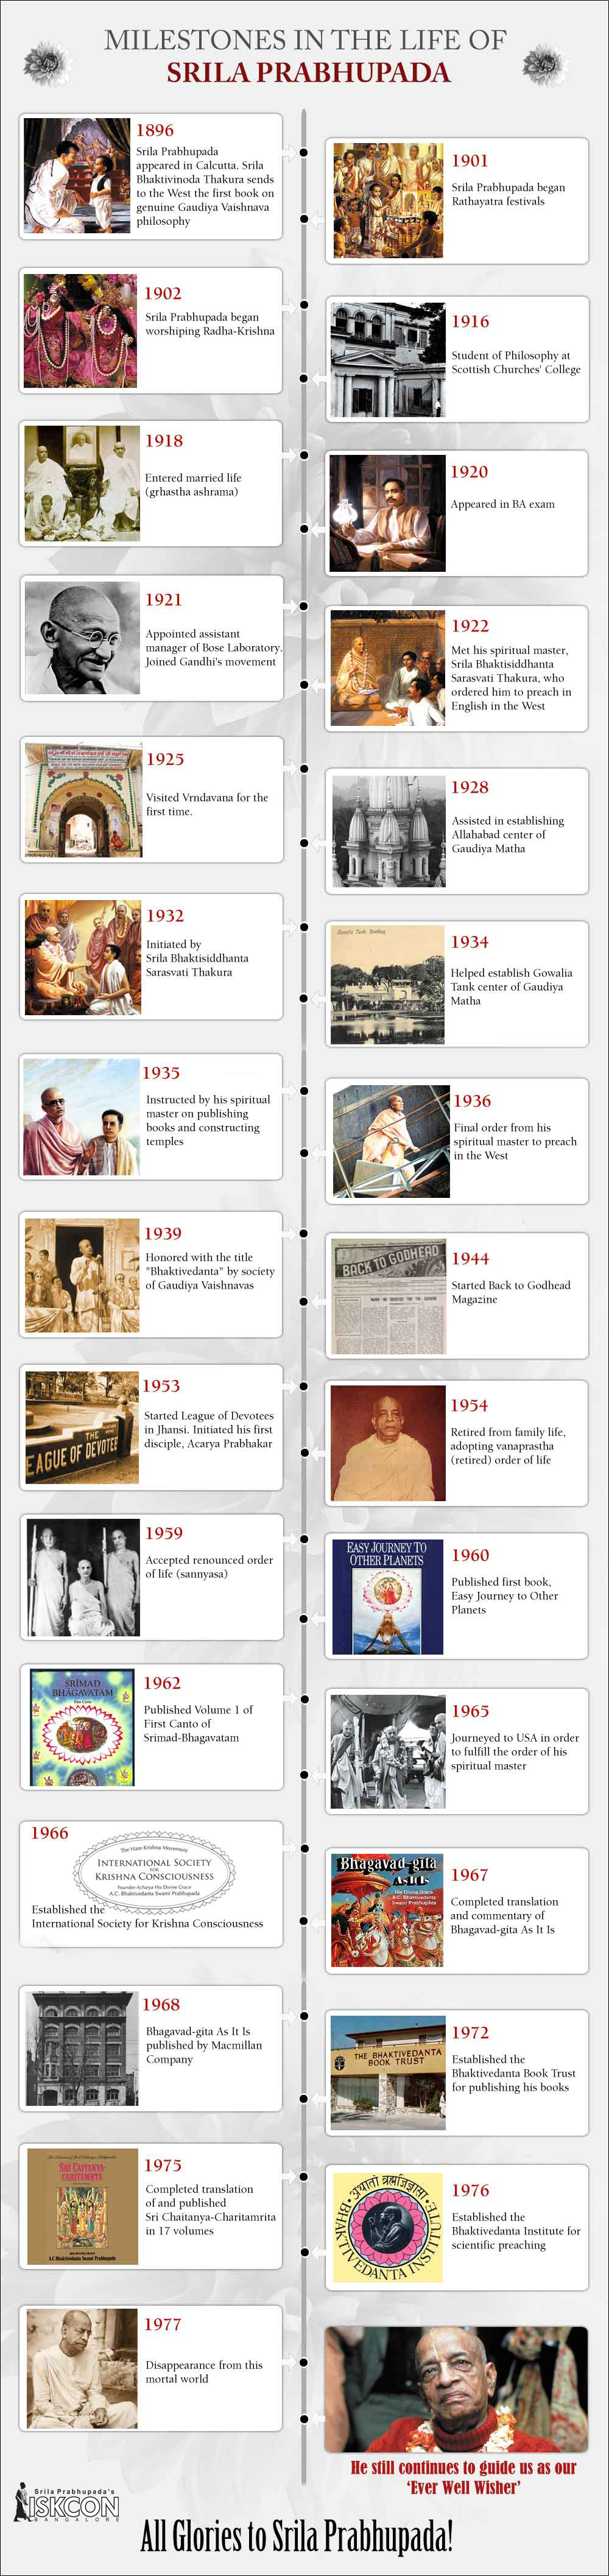 srila prabhupada infographic